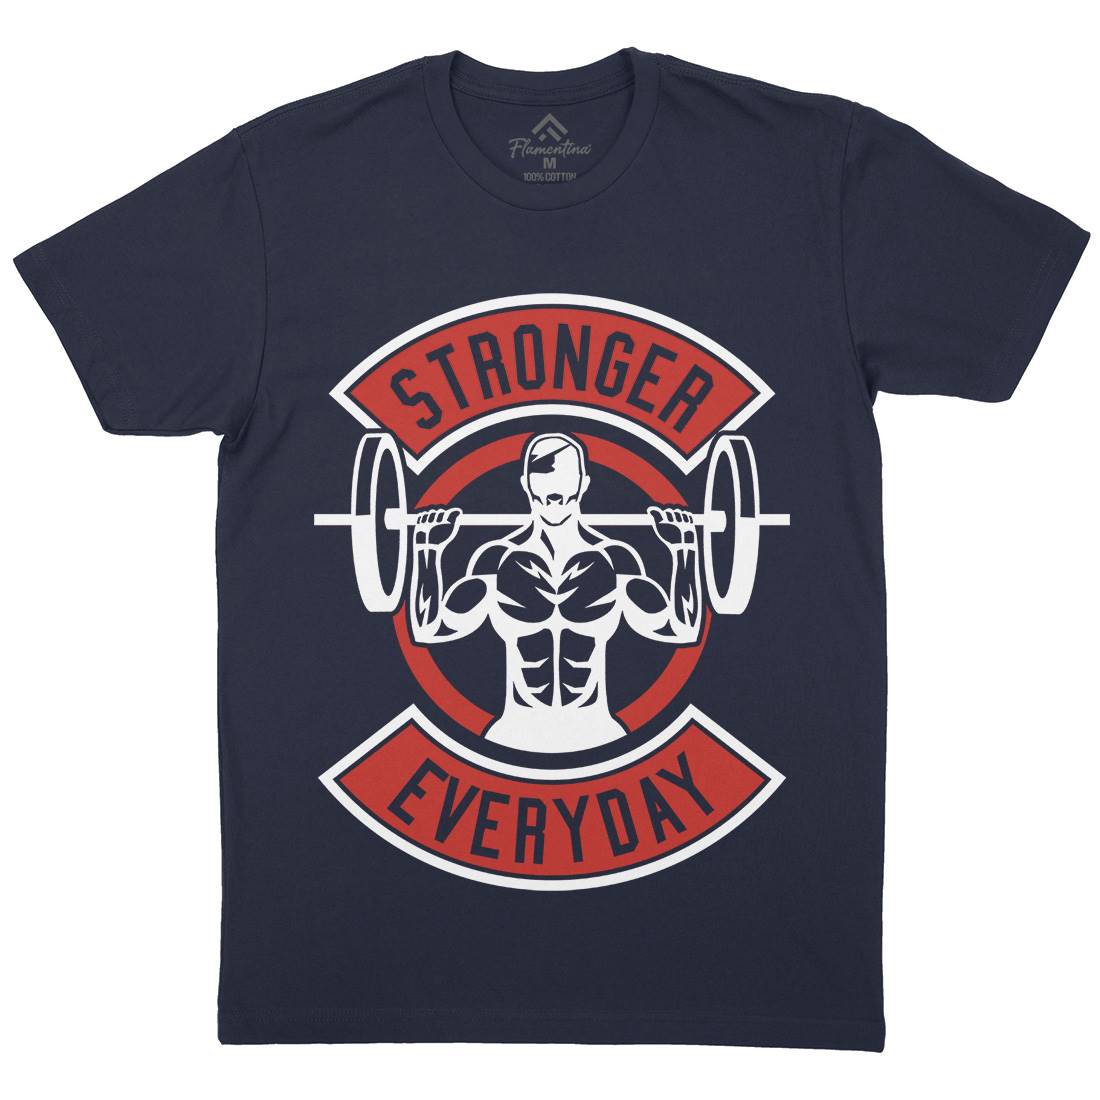 Stronger Everyday Mens Crew Neck T-Shirt Gym A289